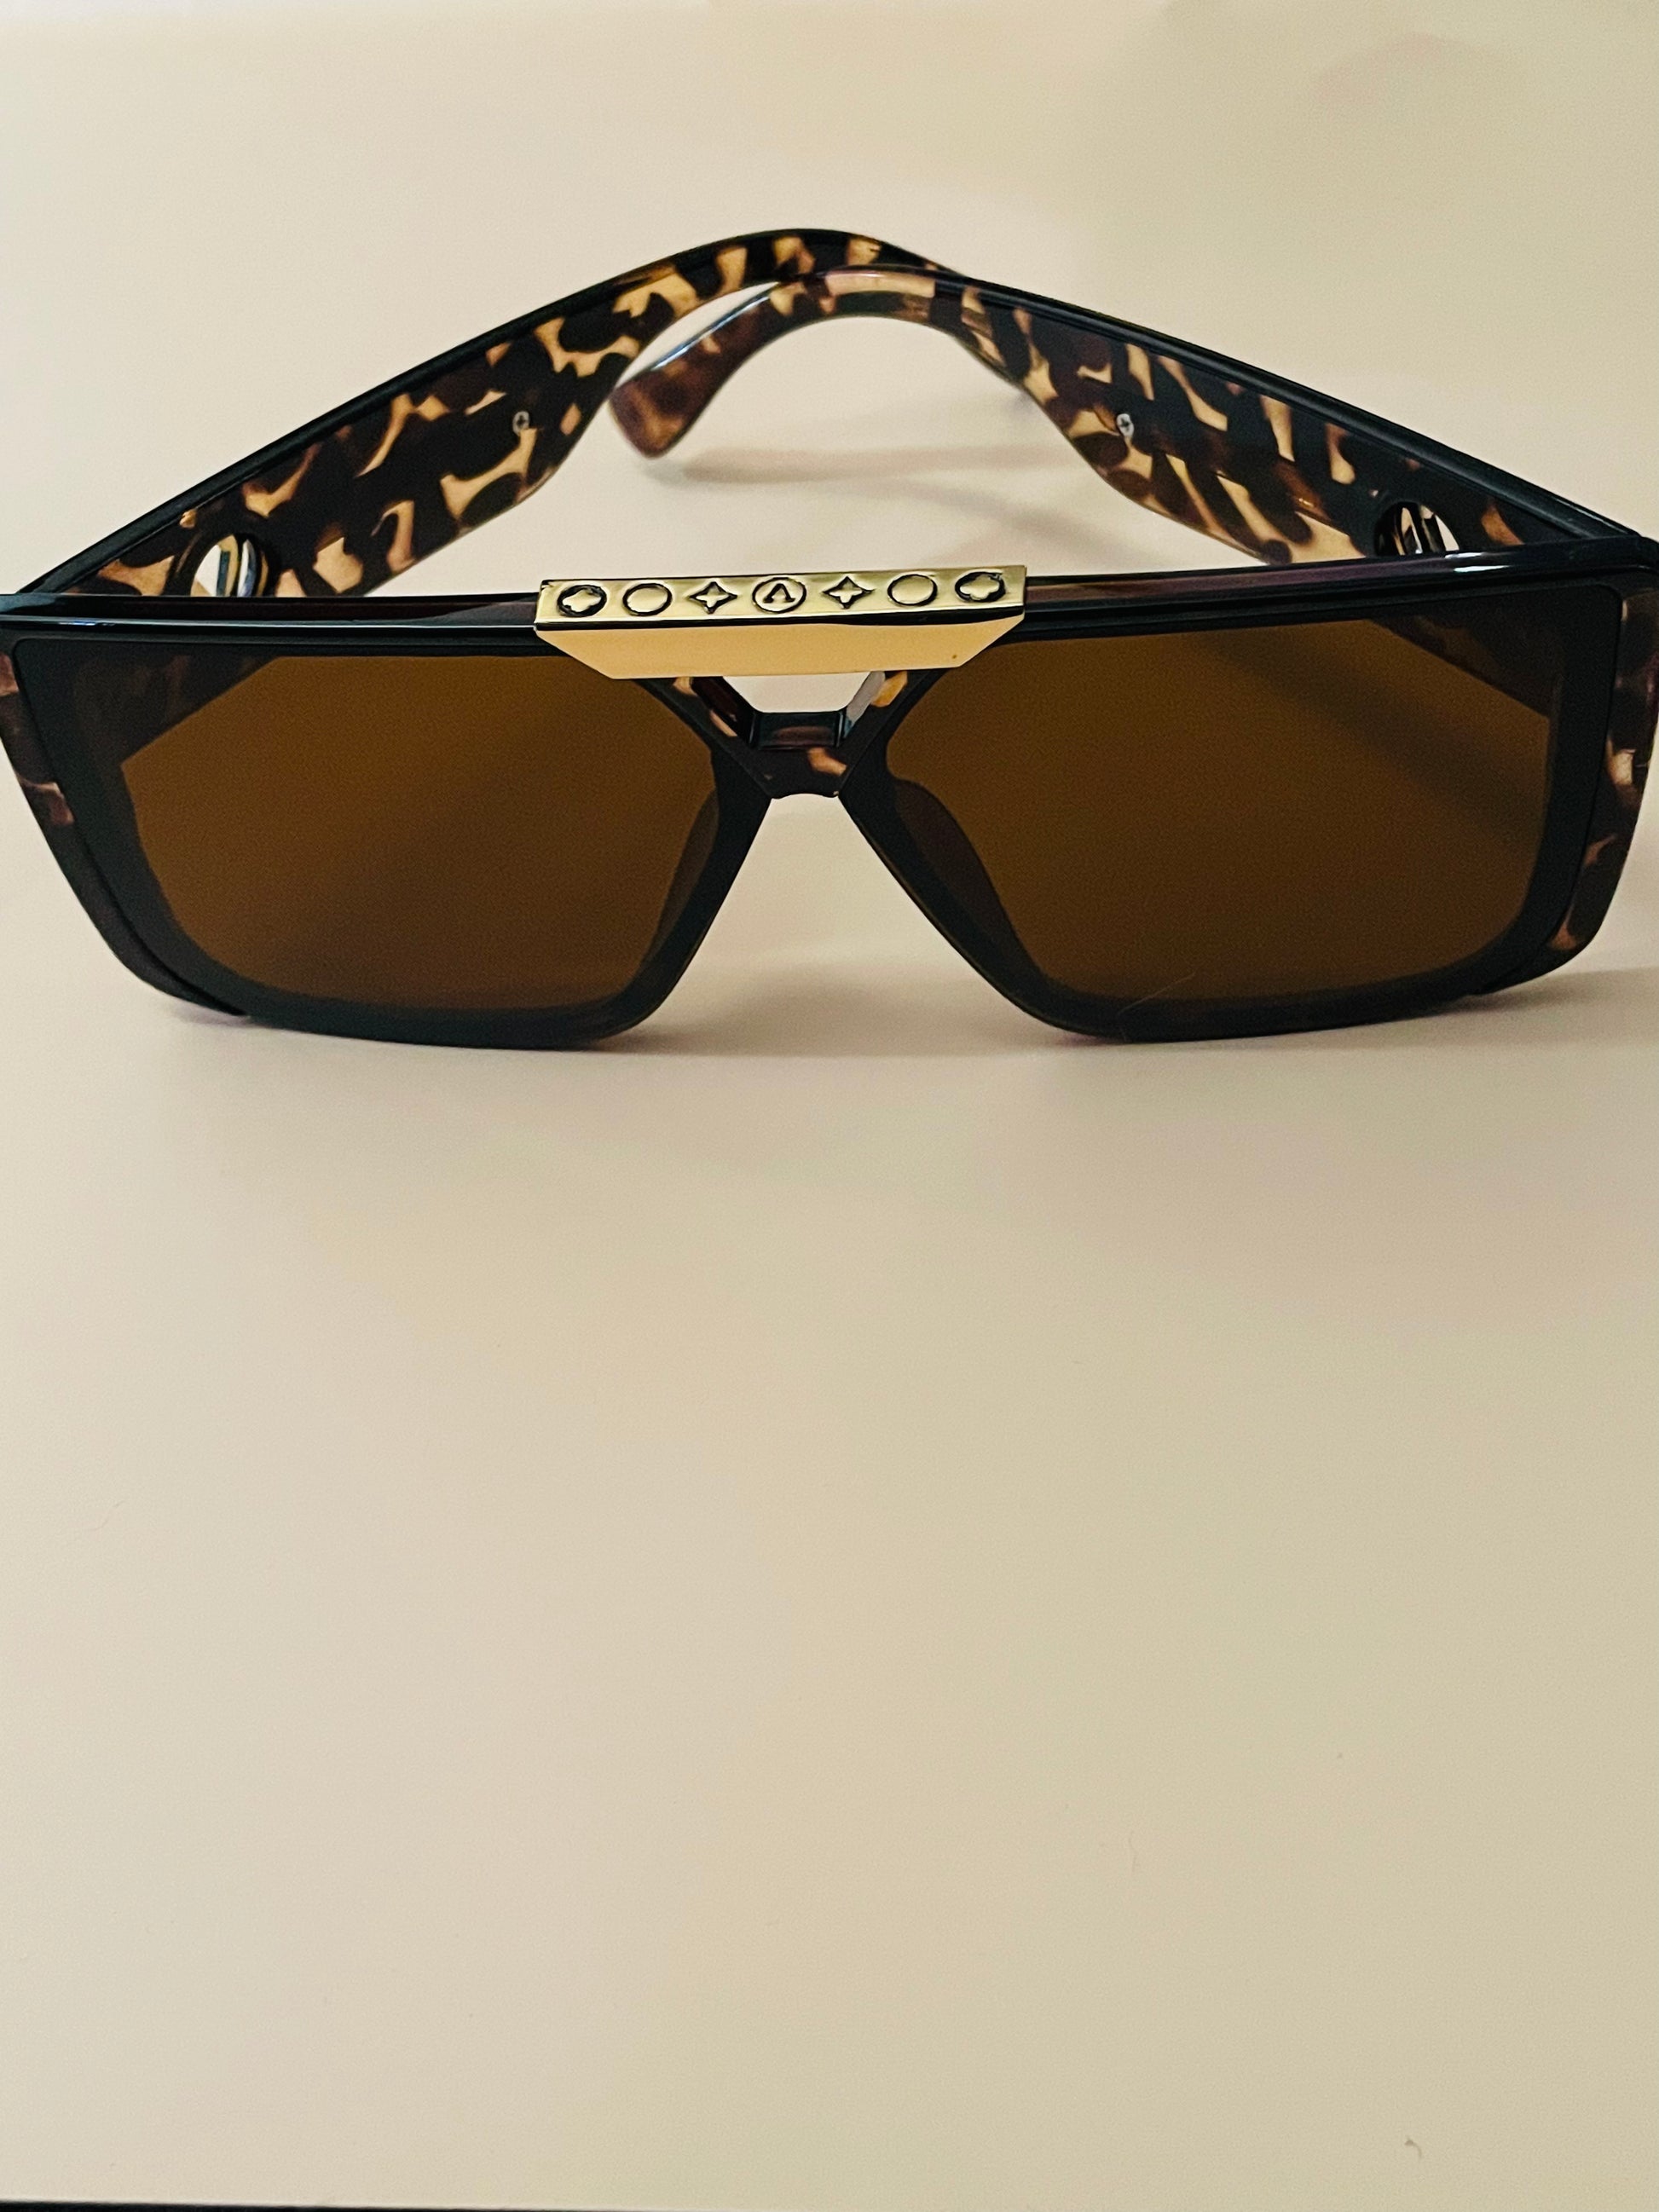 luxury sunglasses for women cute sunglasses for women light sunglasses luxury shades miami sunglasses quality sunglasses leopard sunglasses